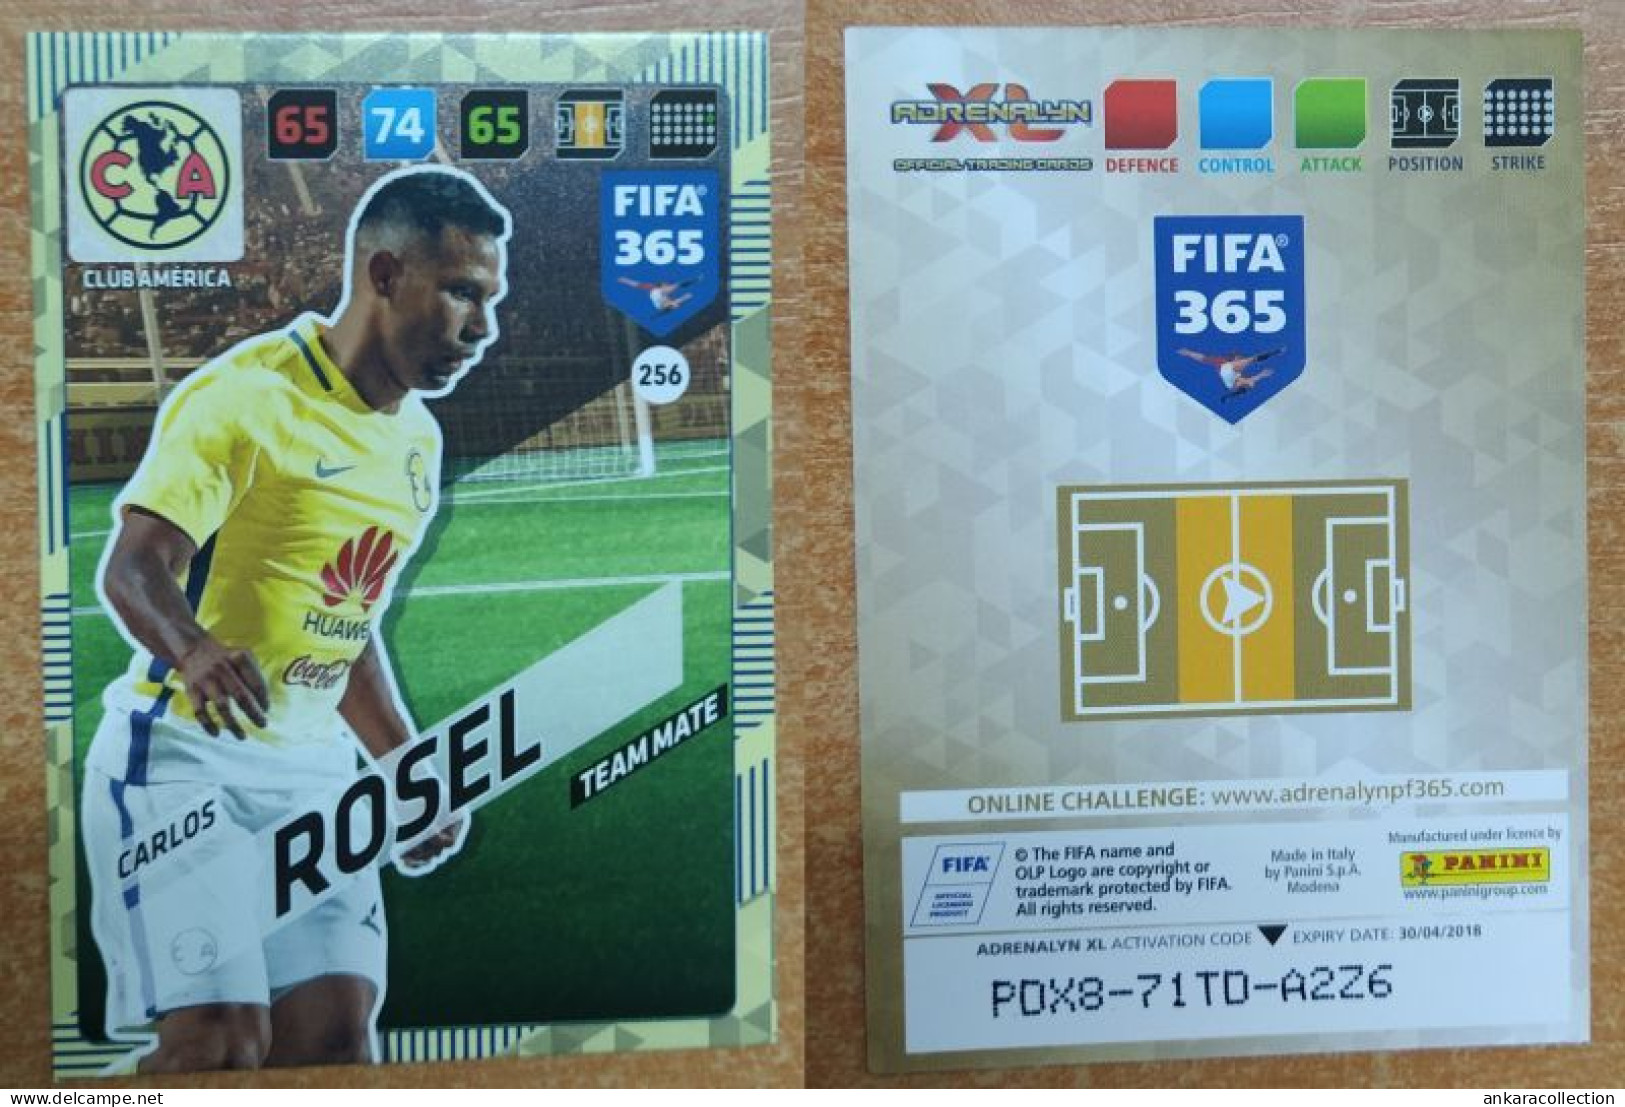 AC - 256 CARLOS ROSEL  CLUB AMERICA  TEAM MATE  FIFA 365 PANINI 2018 ADRENALYN TRADING CARD - Trading-Karten